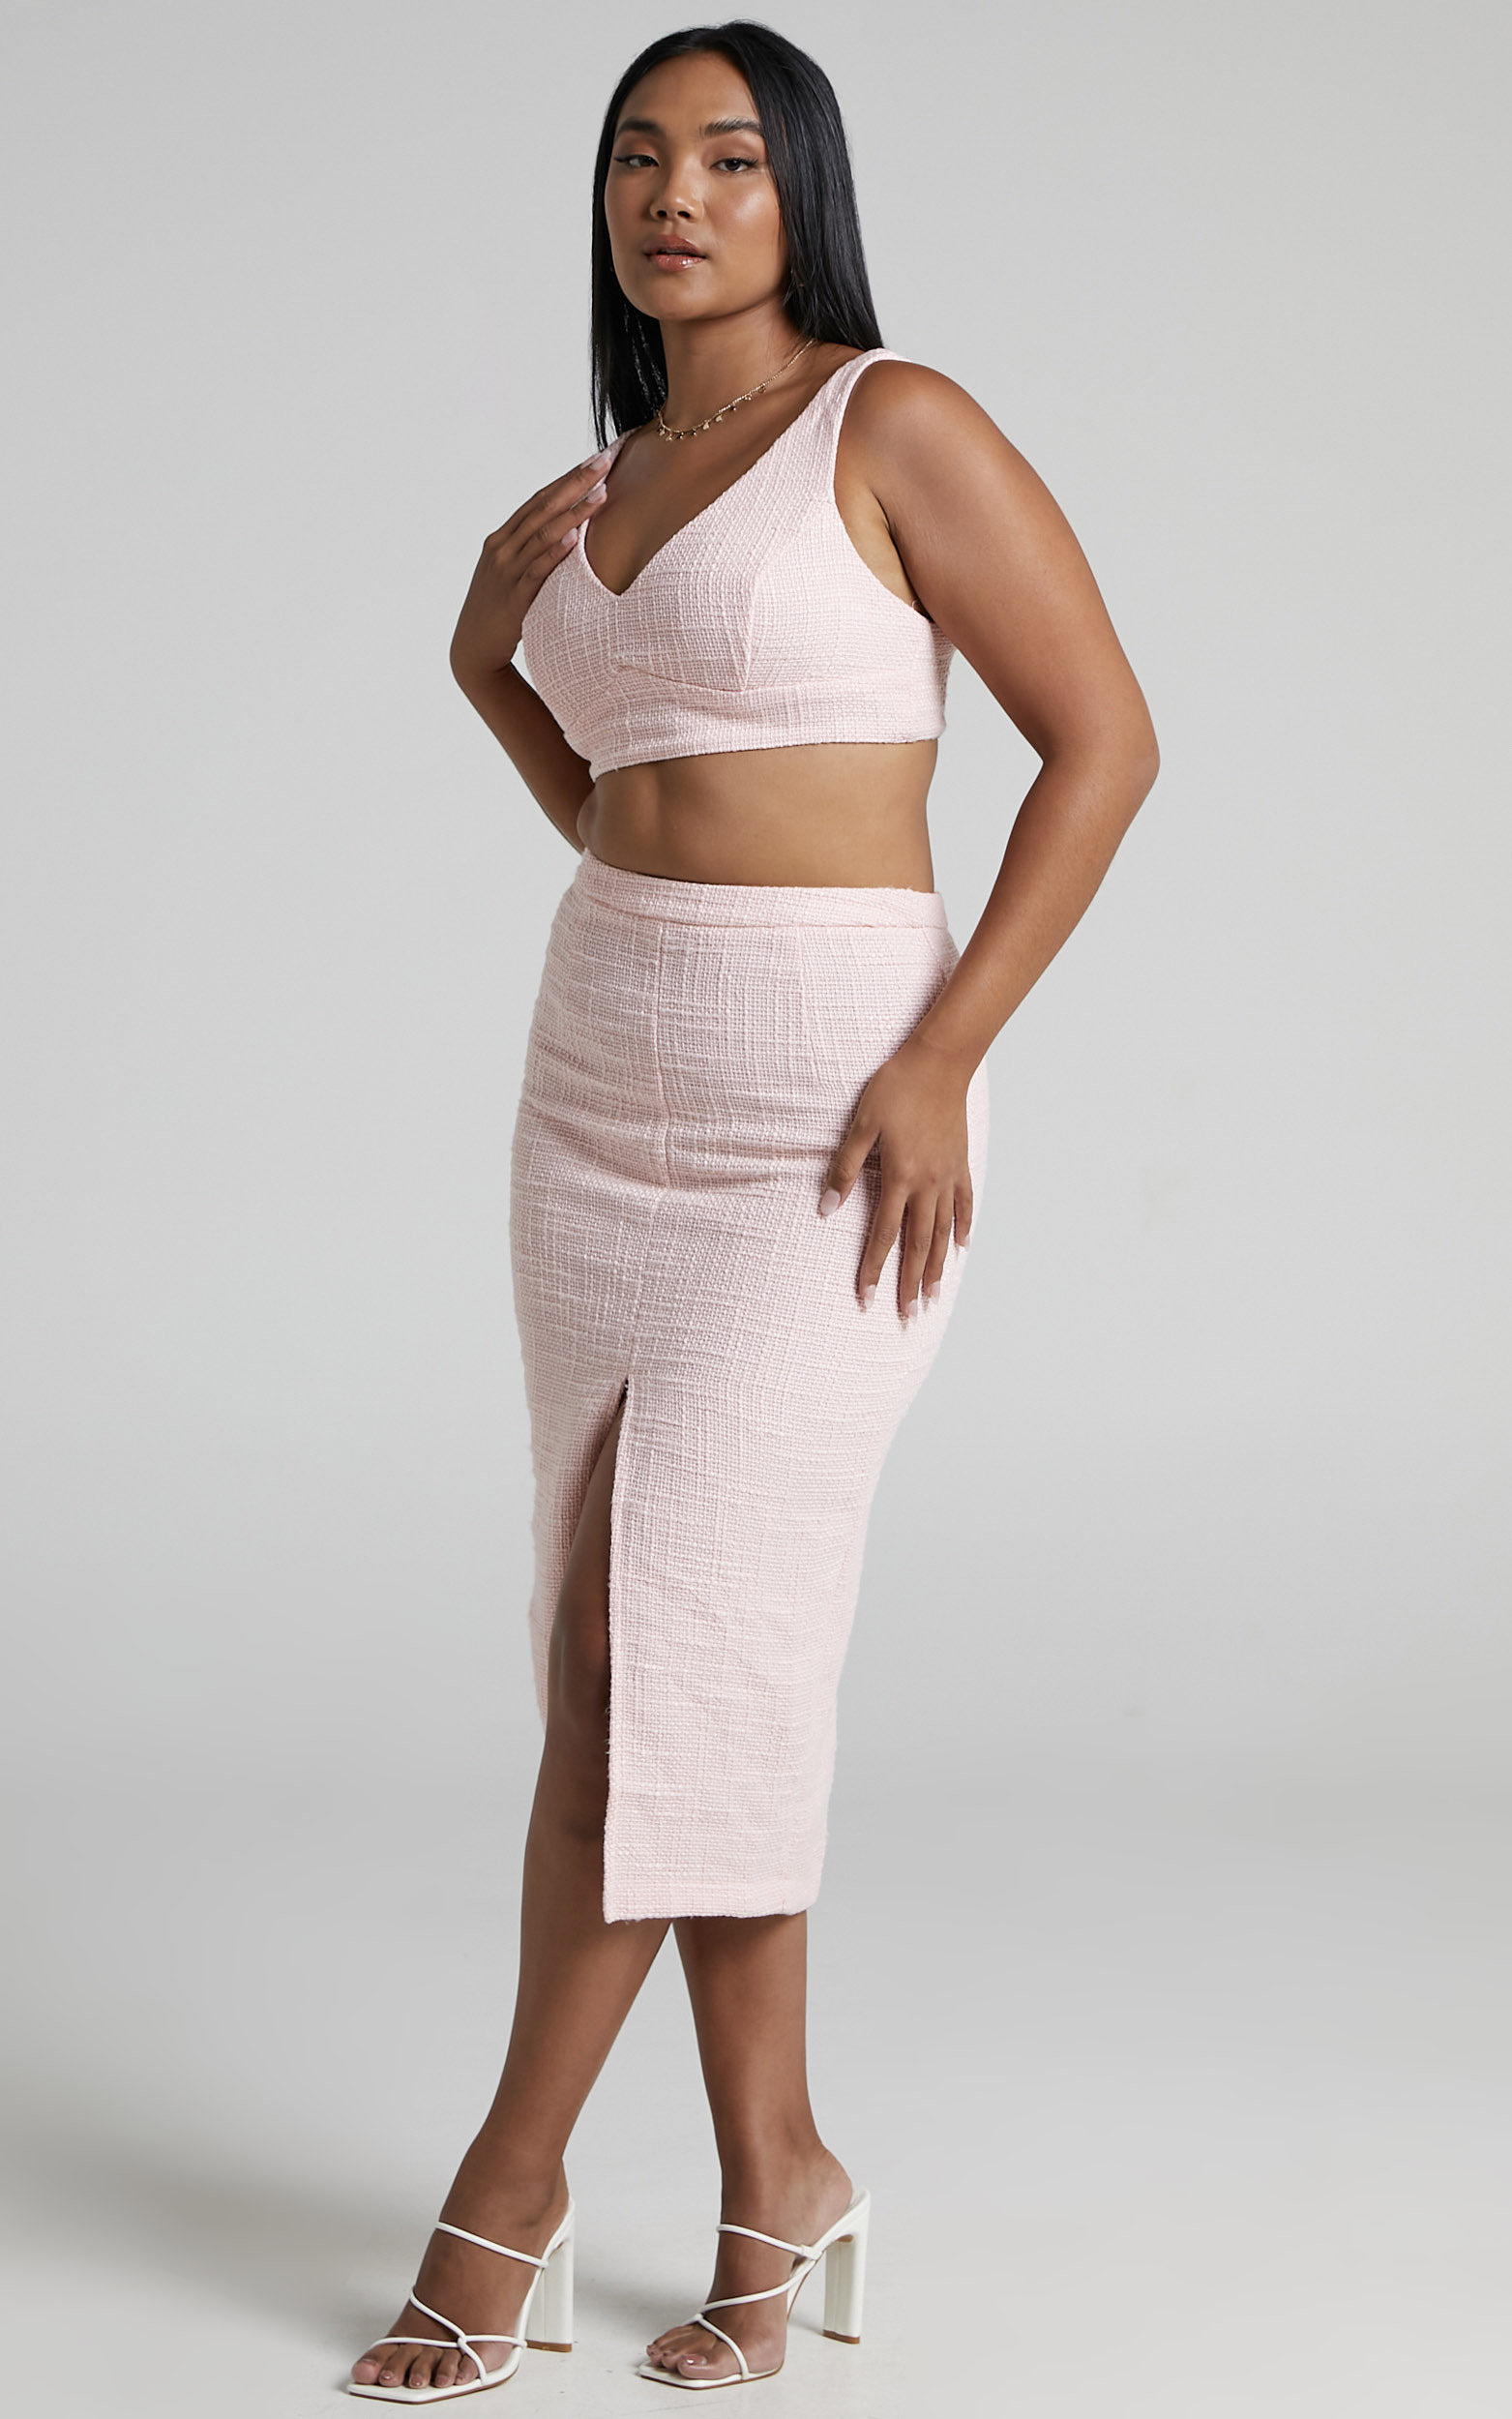 Jhessa Tweed Crop Top and Split Front Midi Skirt Two Piece Set in Pale Pink - 04, PNK1, hi-res image number null